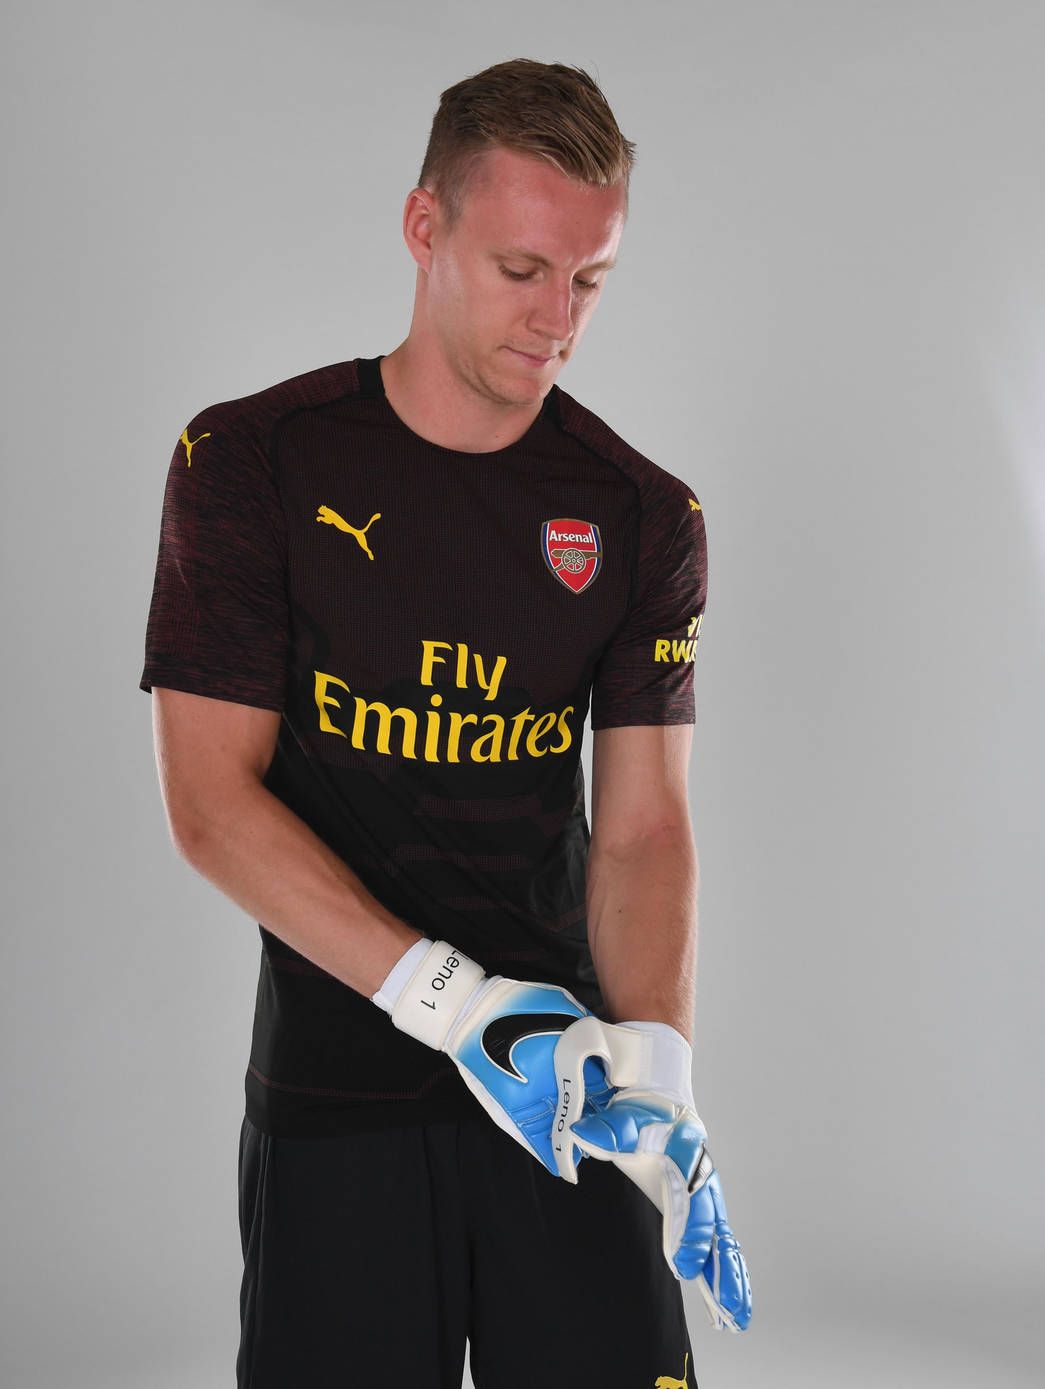 Picture: Bernd Leno in Arsenal colours